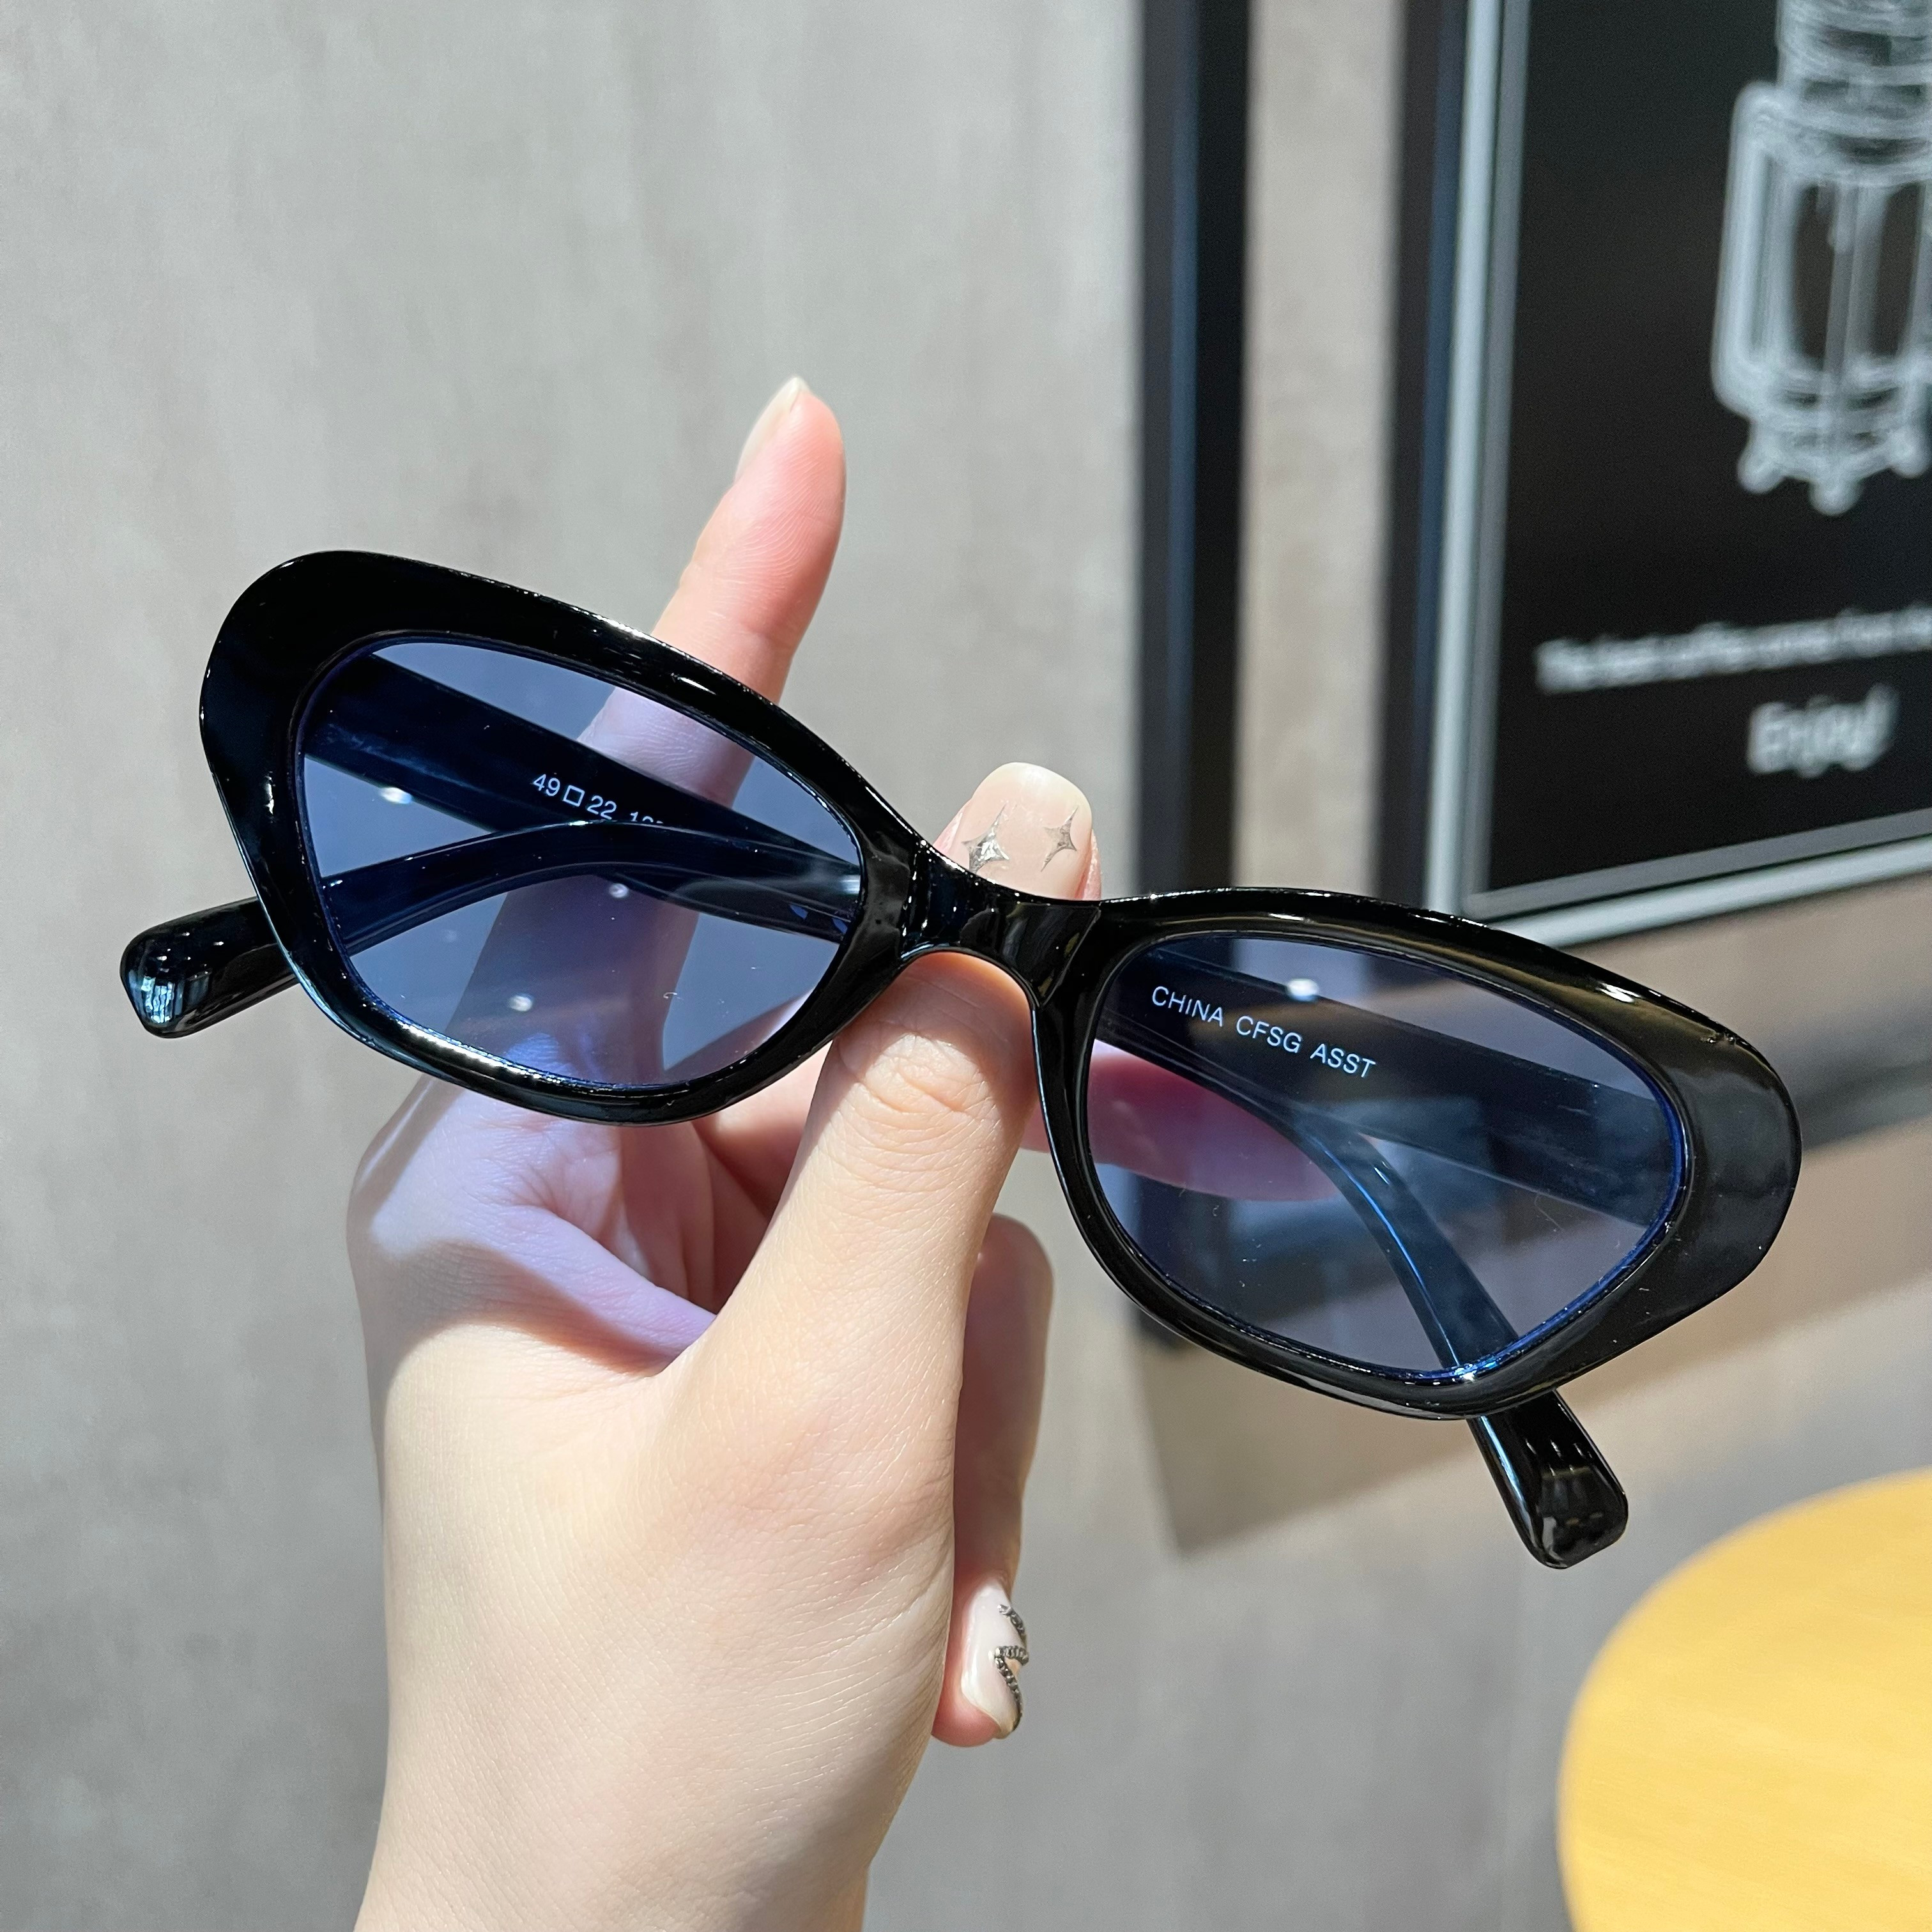 6pcs Women's Square Plastic Decorative Fashion Sunglasses